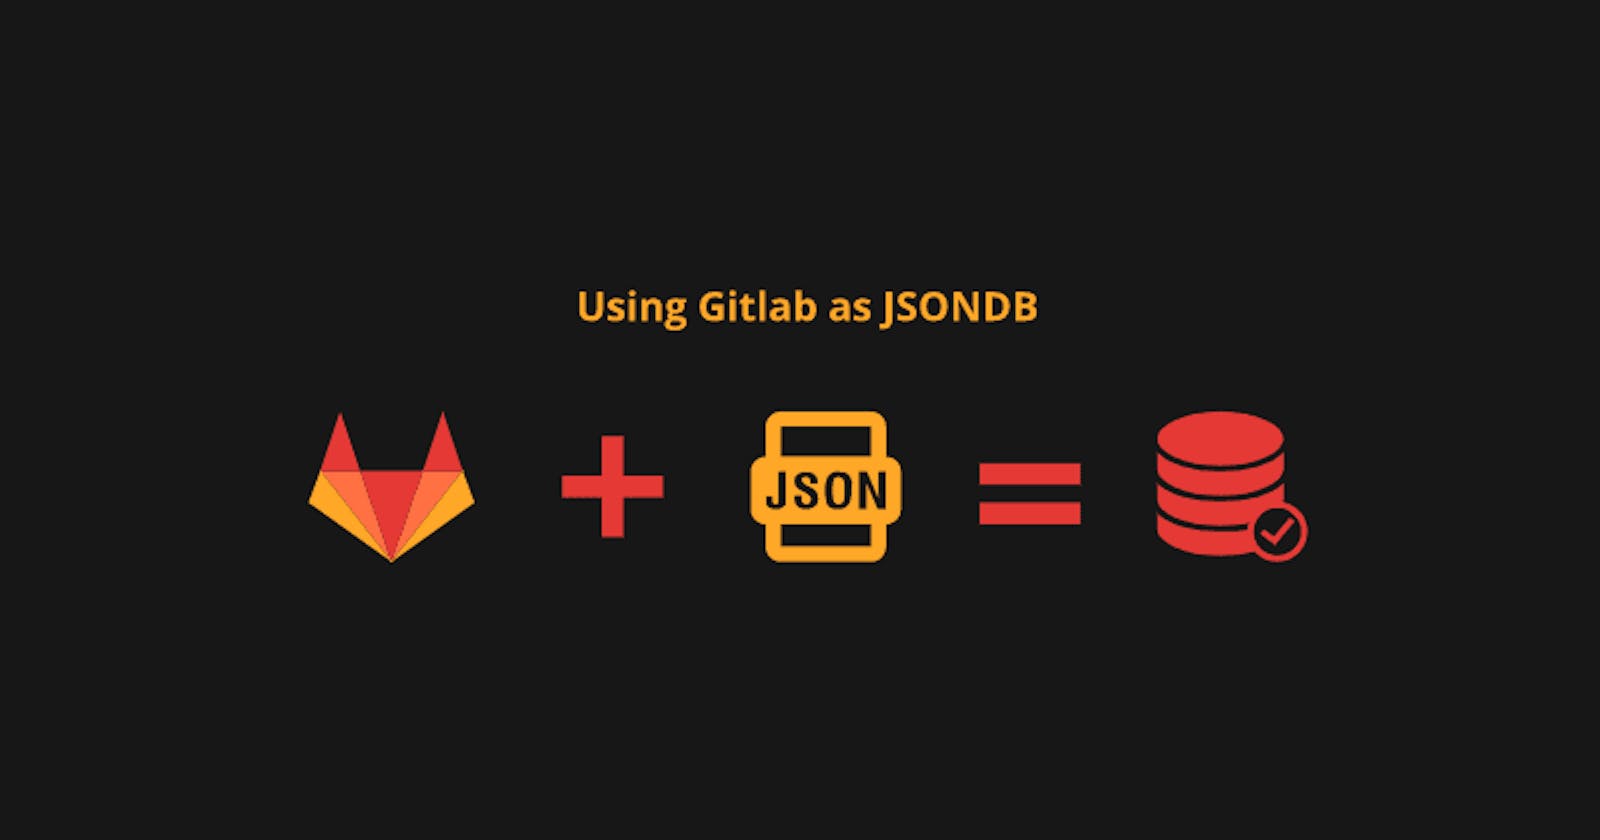 Using Gitlab as JSONDB